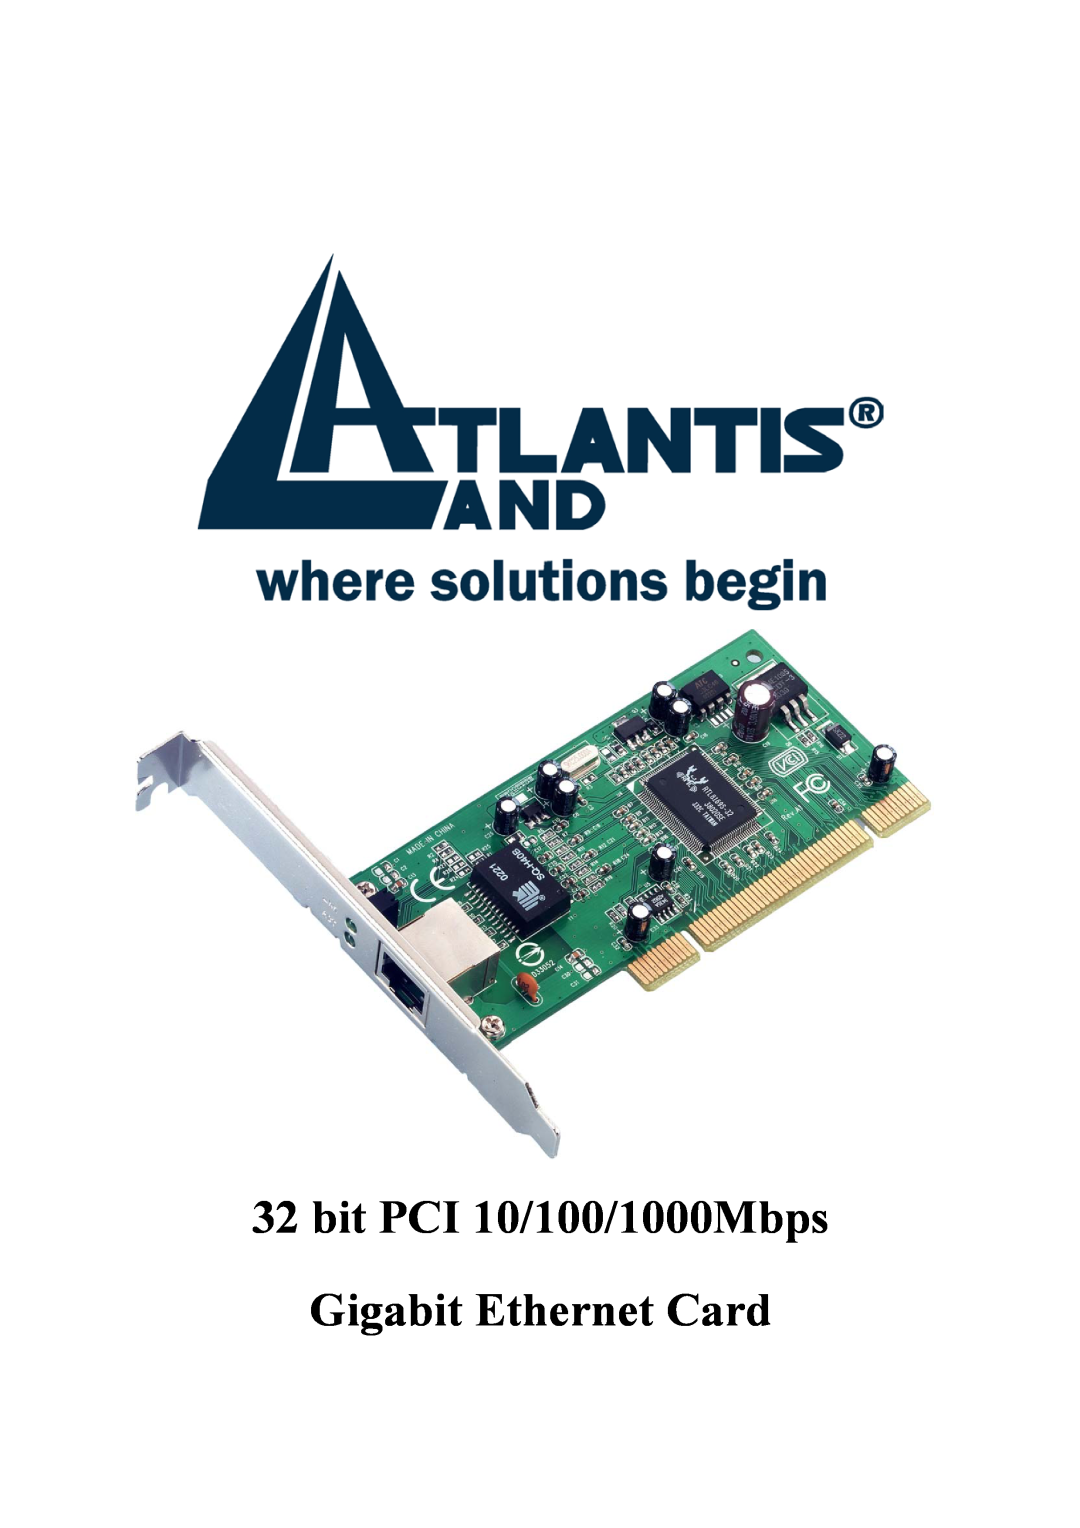 Atlantis Land Gigabit Ethernet Card manual bit PCI 10/100/1000Mbps 